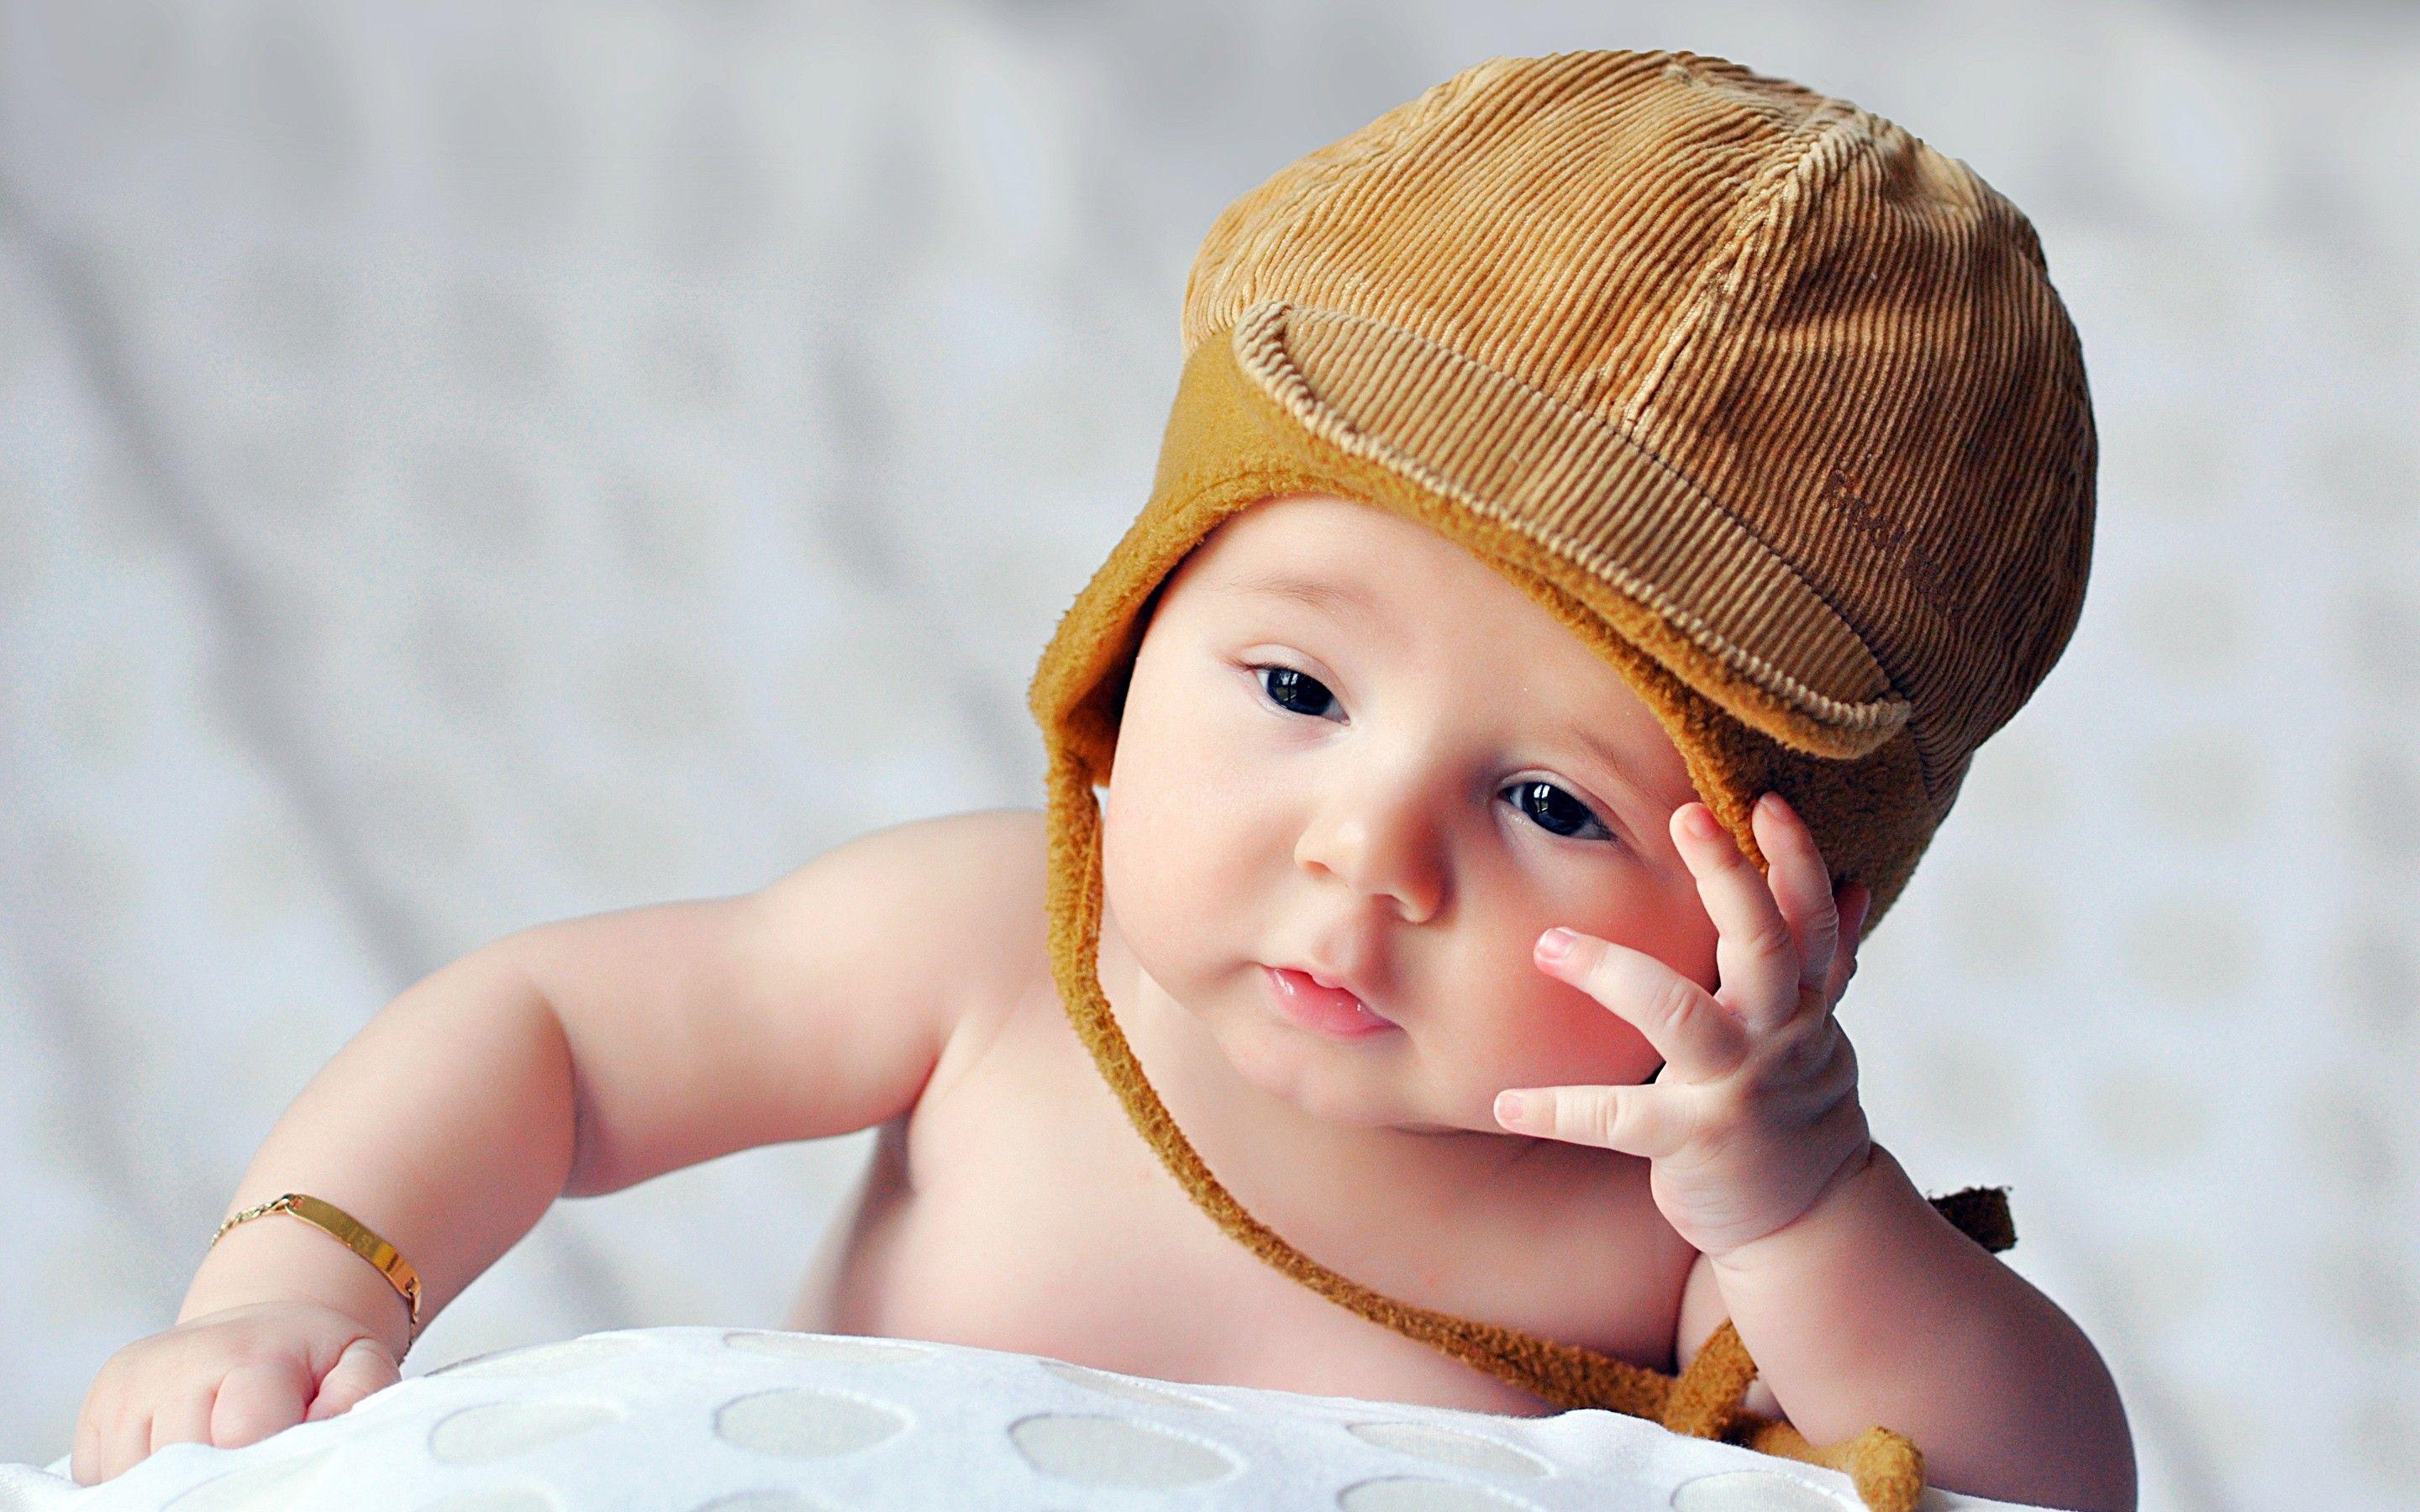 New Born Baby Boy Cute Image HD Photo Desktop Pulse With Stylish